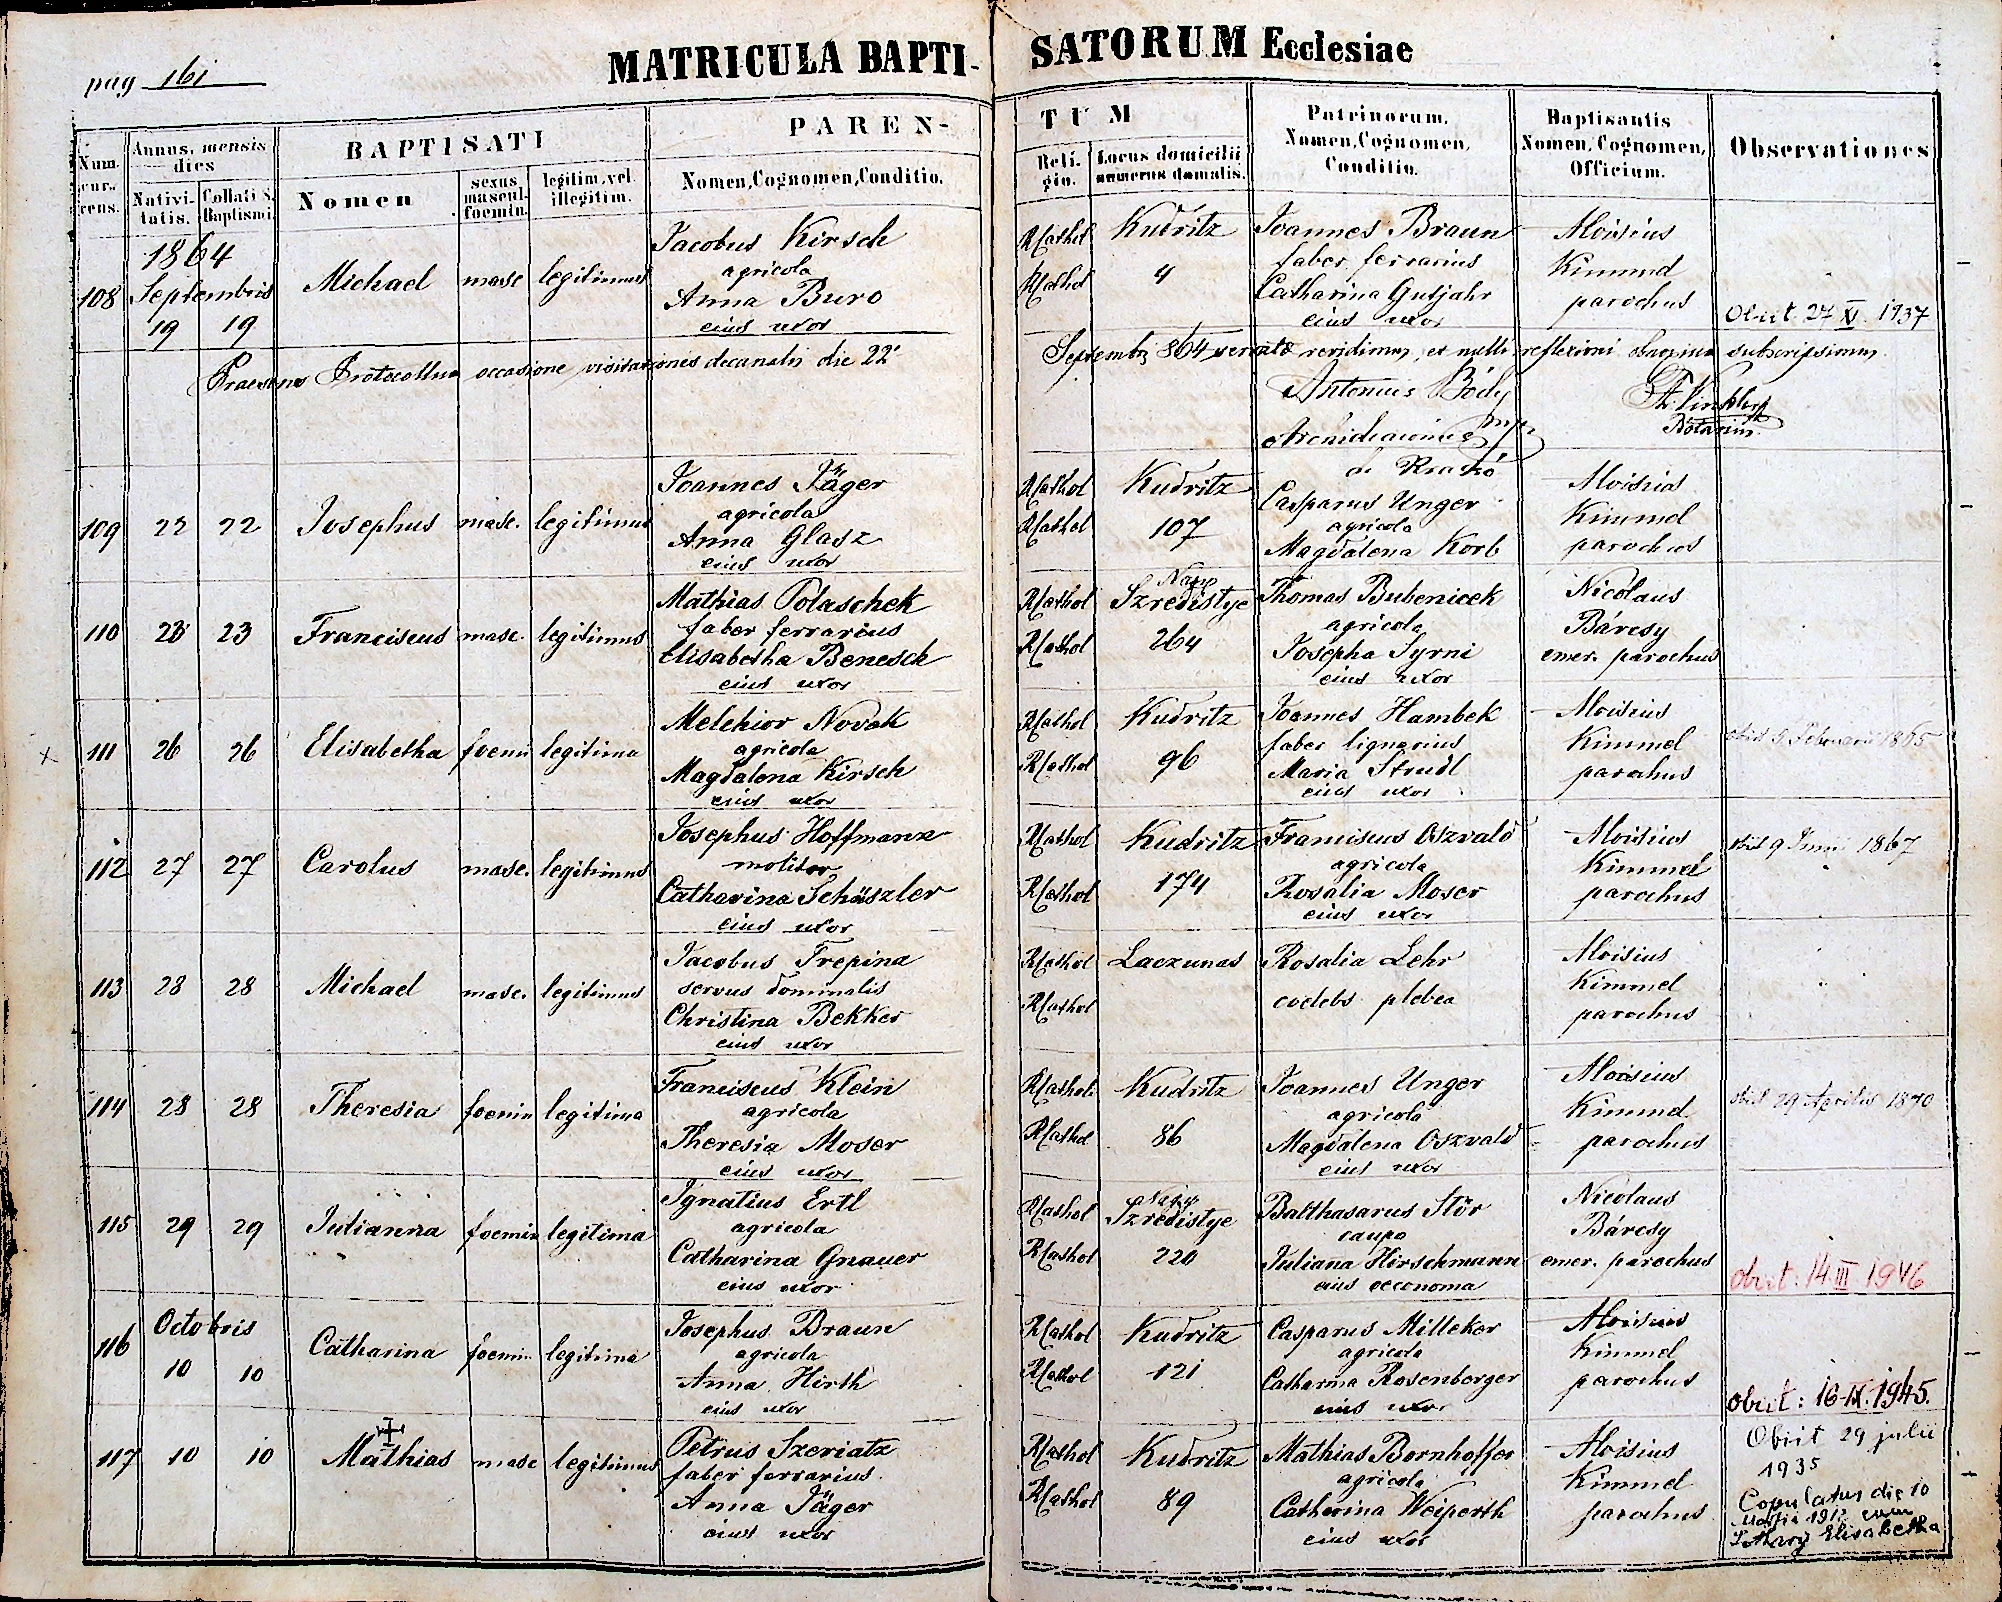 images/church_records/BIRTHS/1852-1870B/161